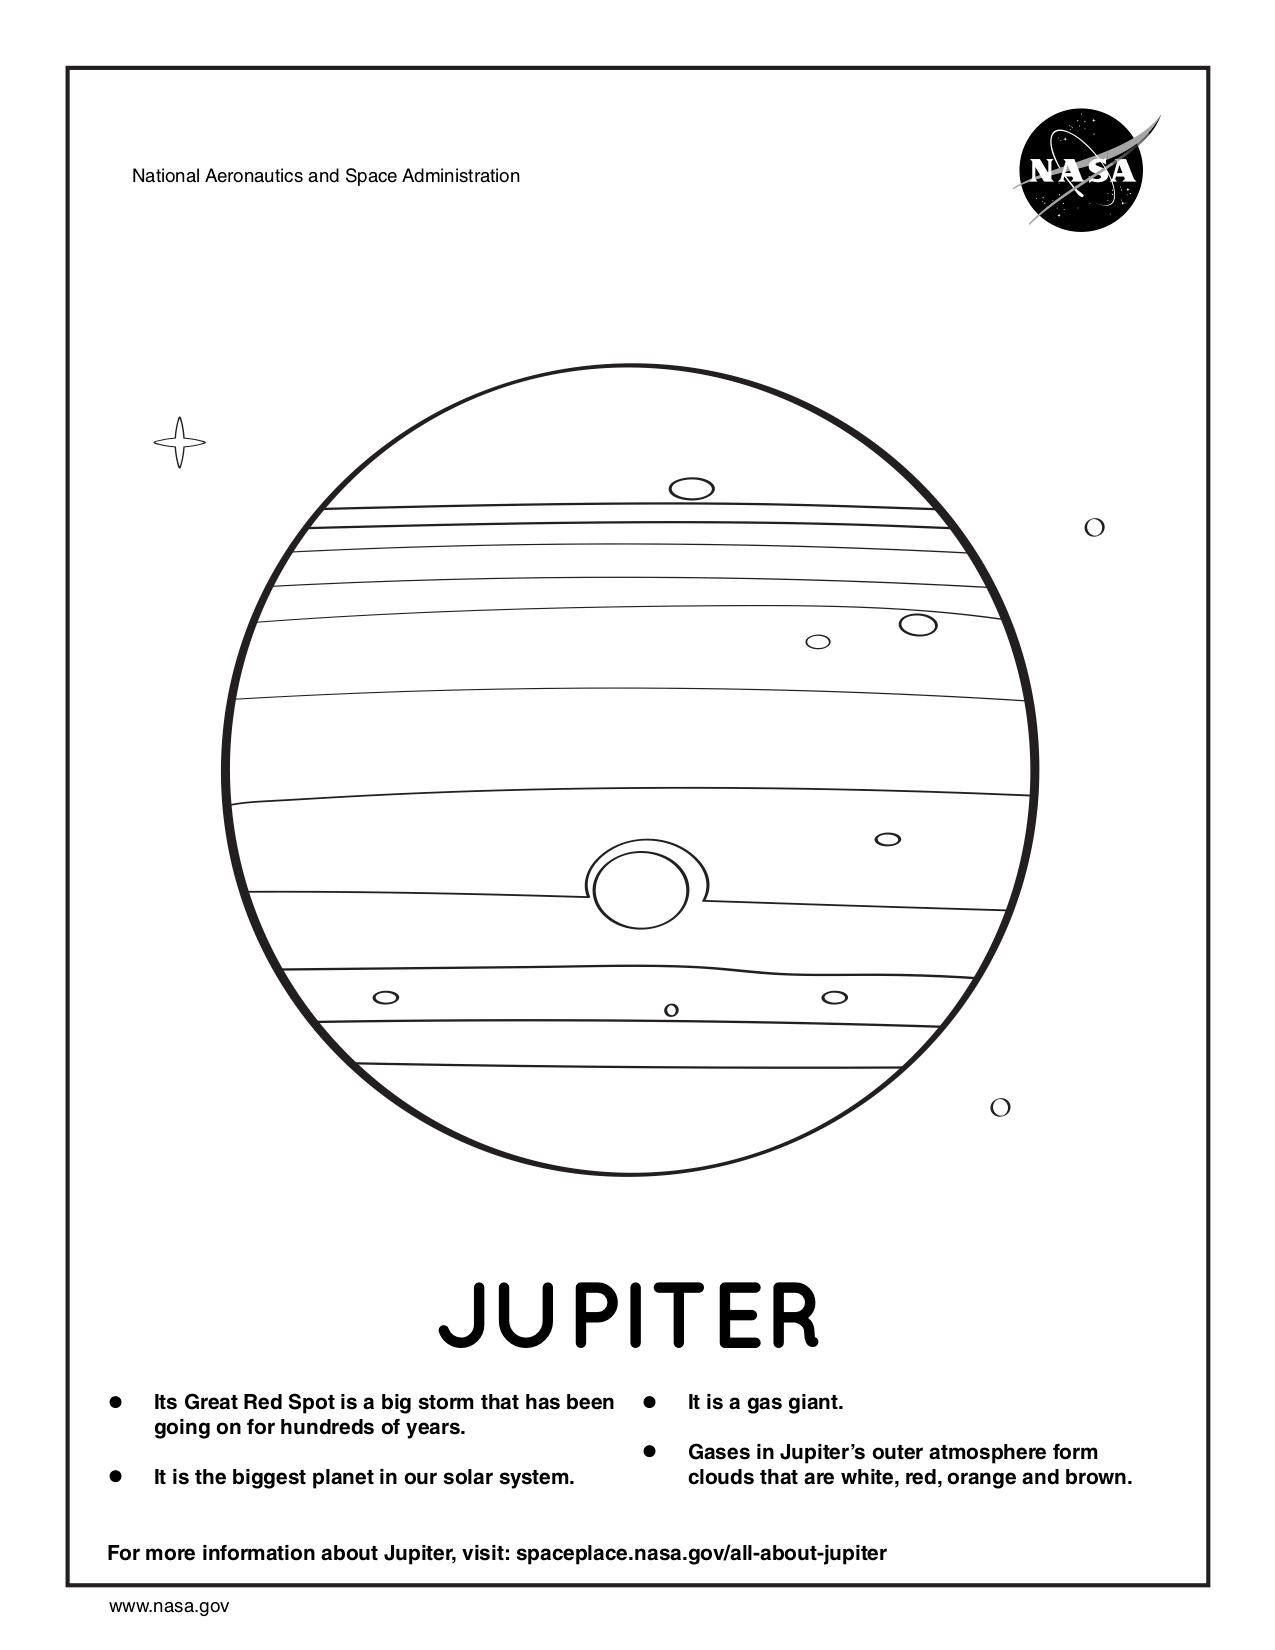 Coloring page for Jupiter.